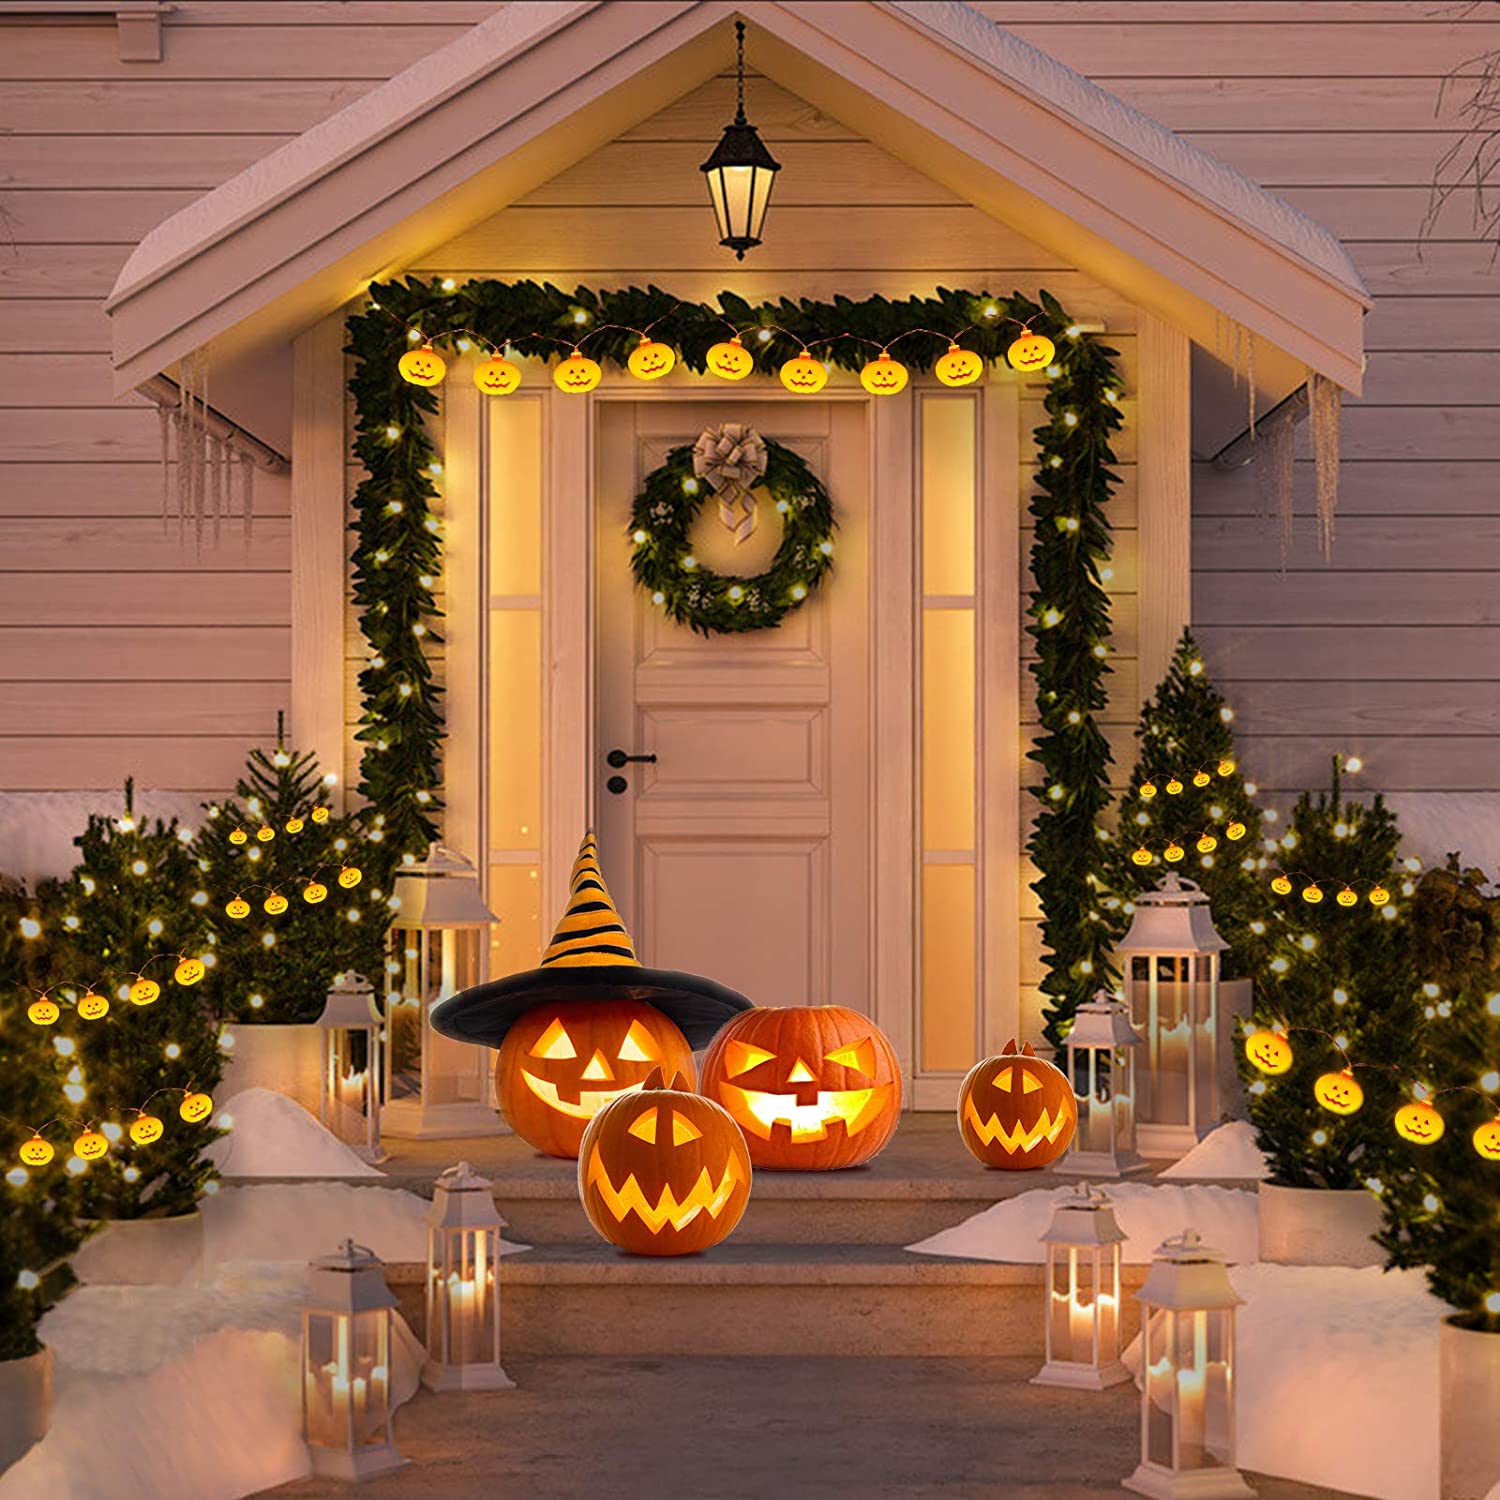 98ft-Halloween-Decorations-20-LED-Pumpkin-String-Lights-Home-Garden-Decor-Warm-White-1890365-4